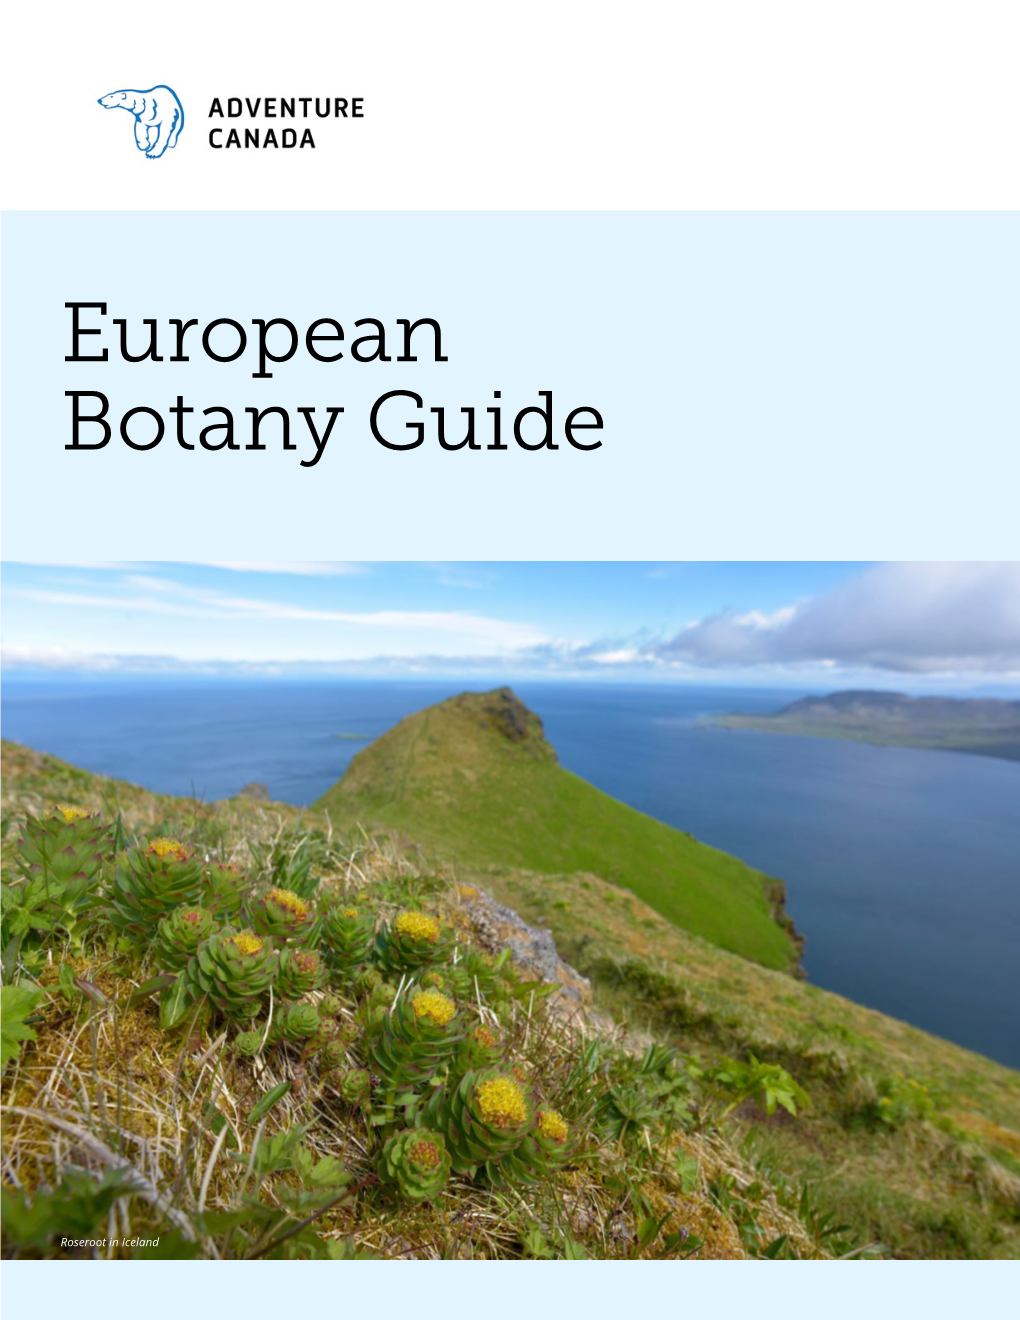 1 European Botany Guide May 2019